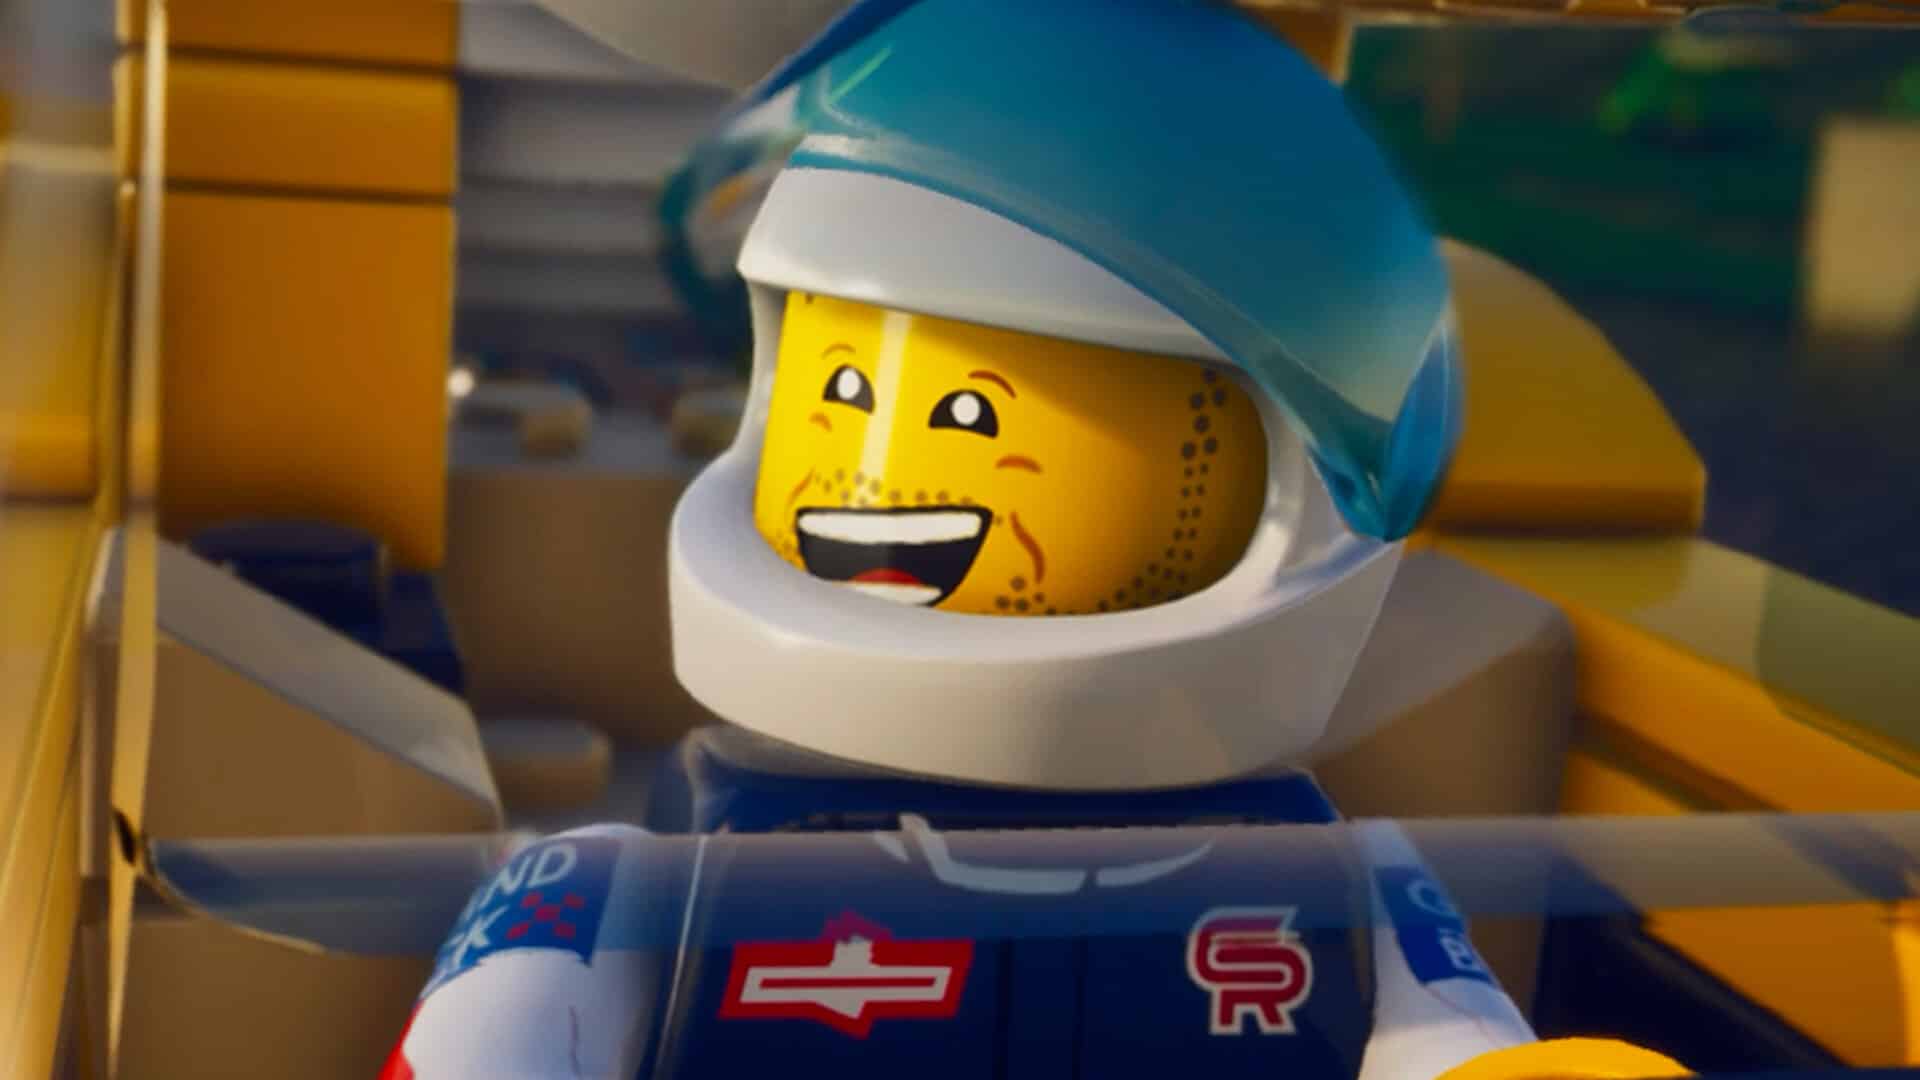 LEGO 2K Drive pc-systeemvereisten onthuld